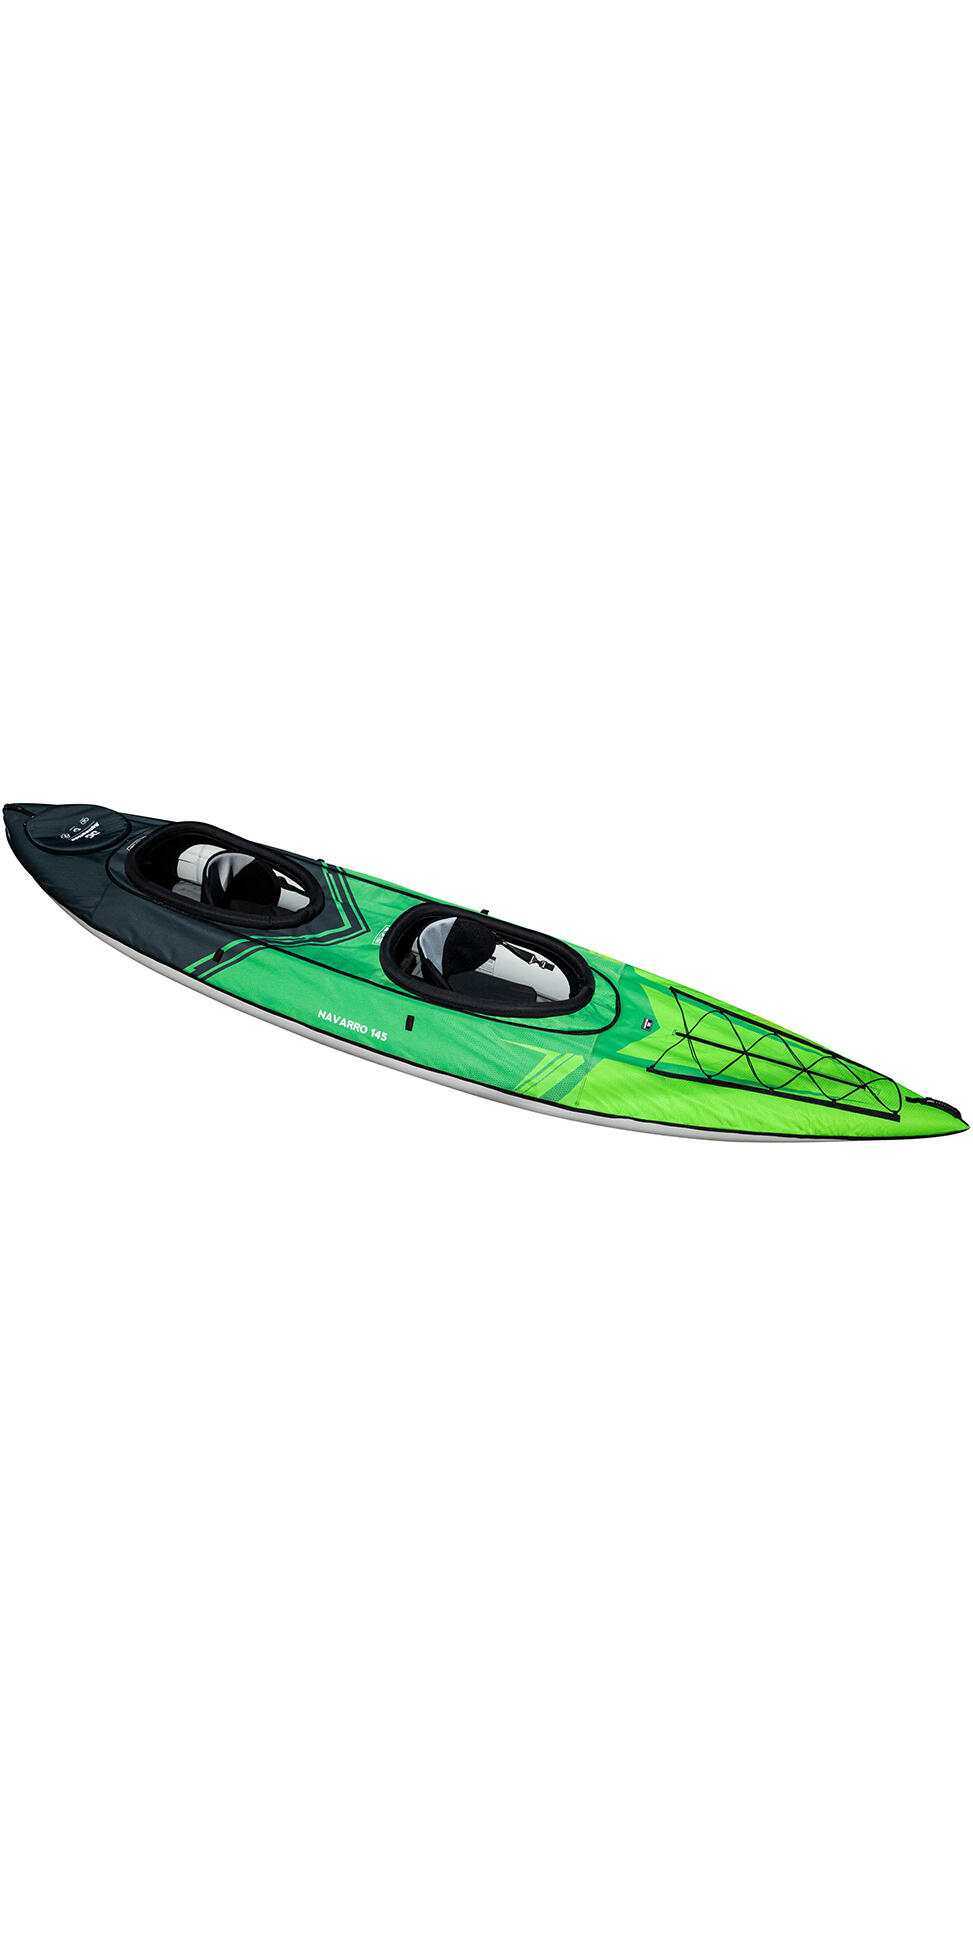 Navarro 145 2 Person Inflatable Kayak 2/4